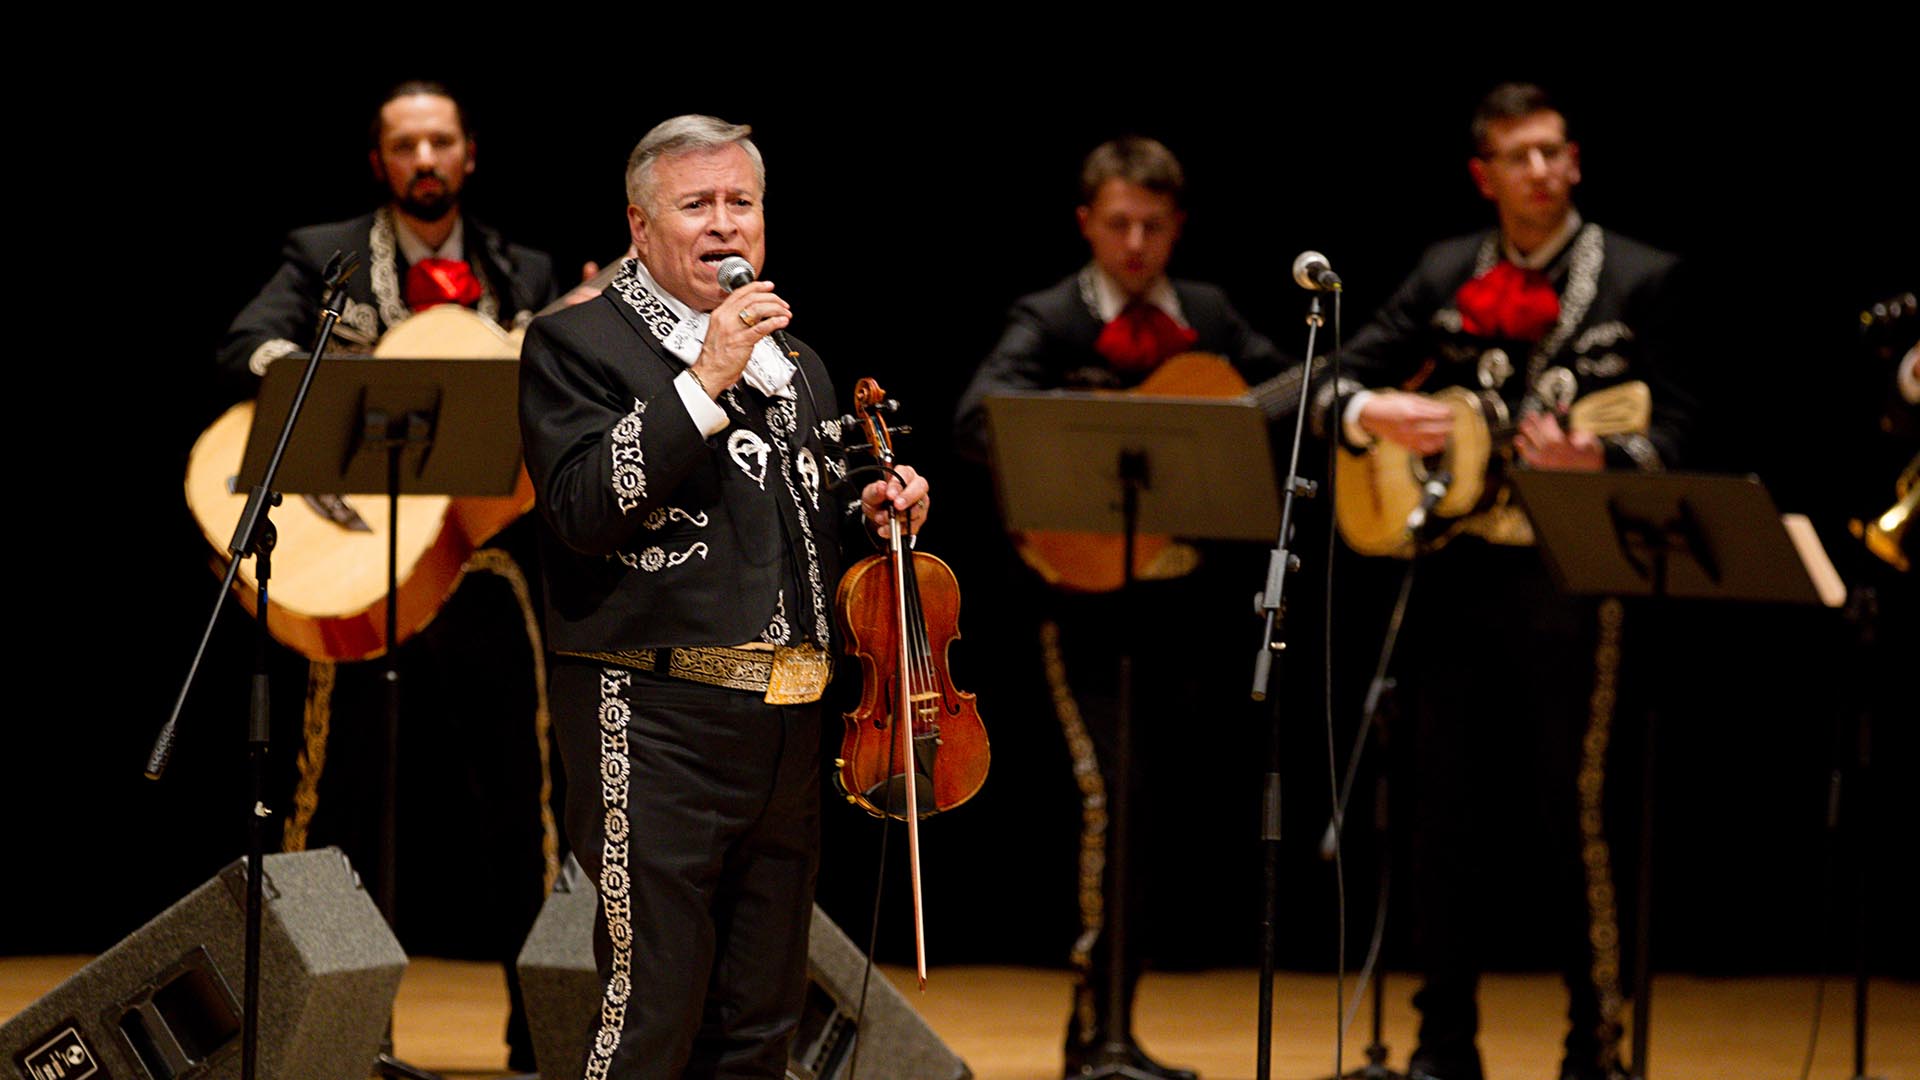 Lorenzo Trujillo sings with Mariachi Los Correcaminos for the mariachi festival at the King Center